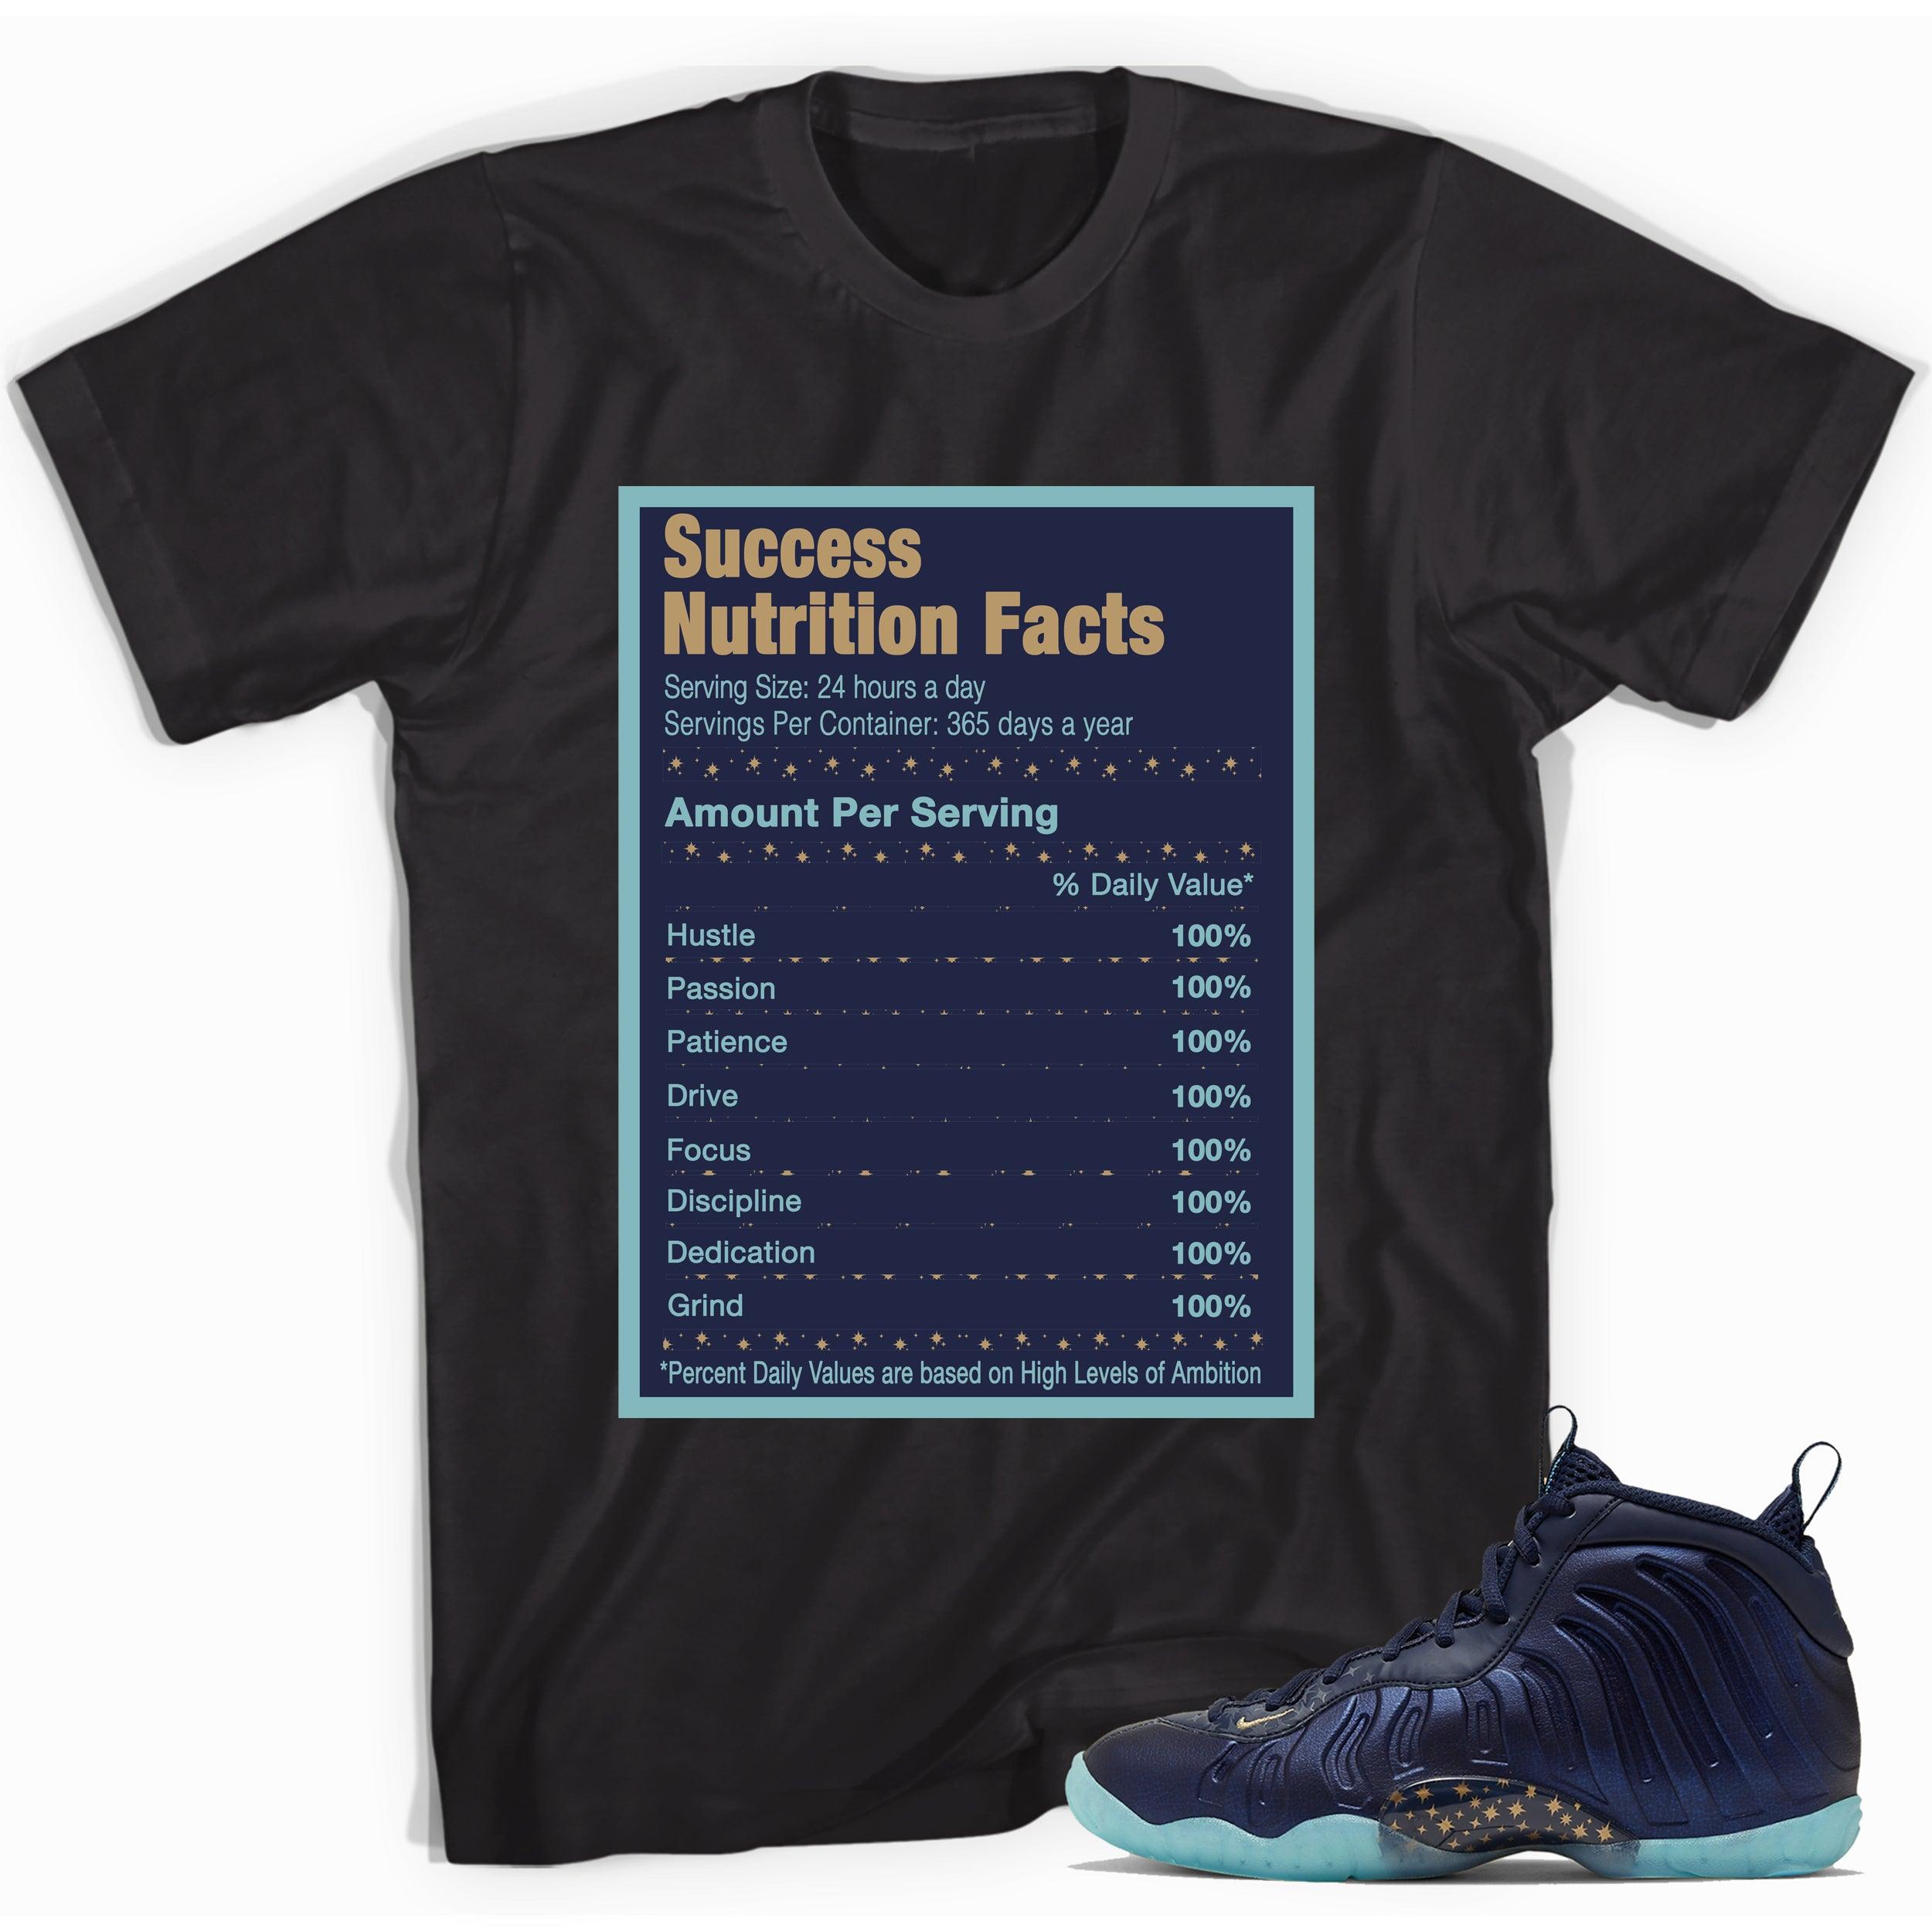 Success Nutrition Shirt Nike Air Foamposite One Obsidian Metallic Gold photo